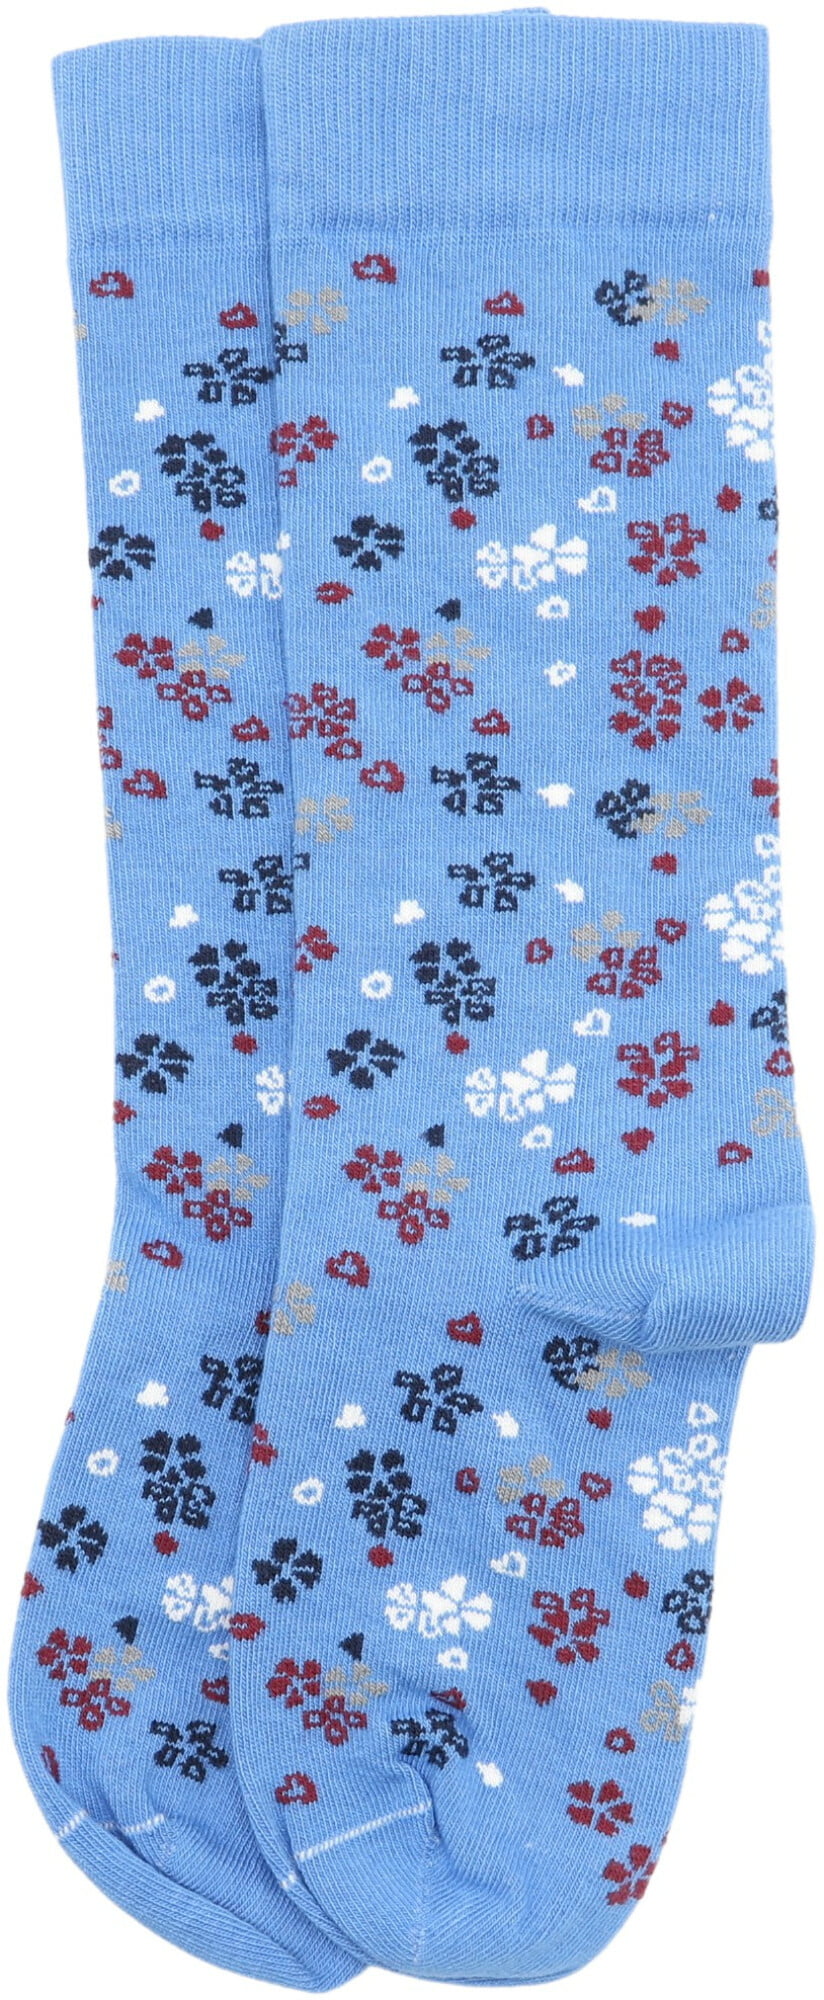 American Trench Cotton Mil-spec Socks in Blue for Men Mens Clothing Underwear Socks 